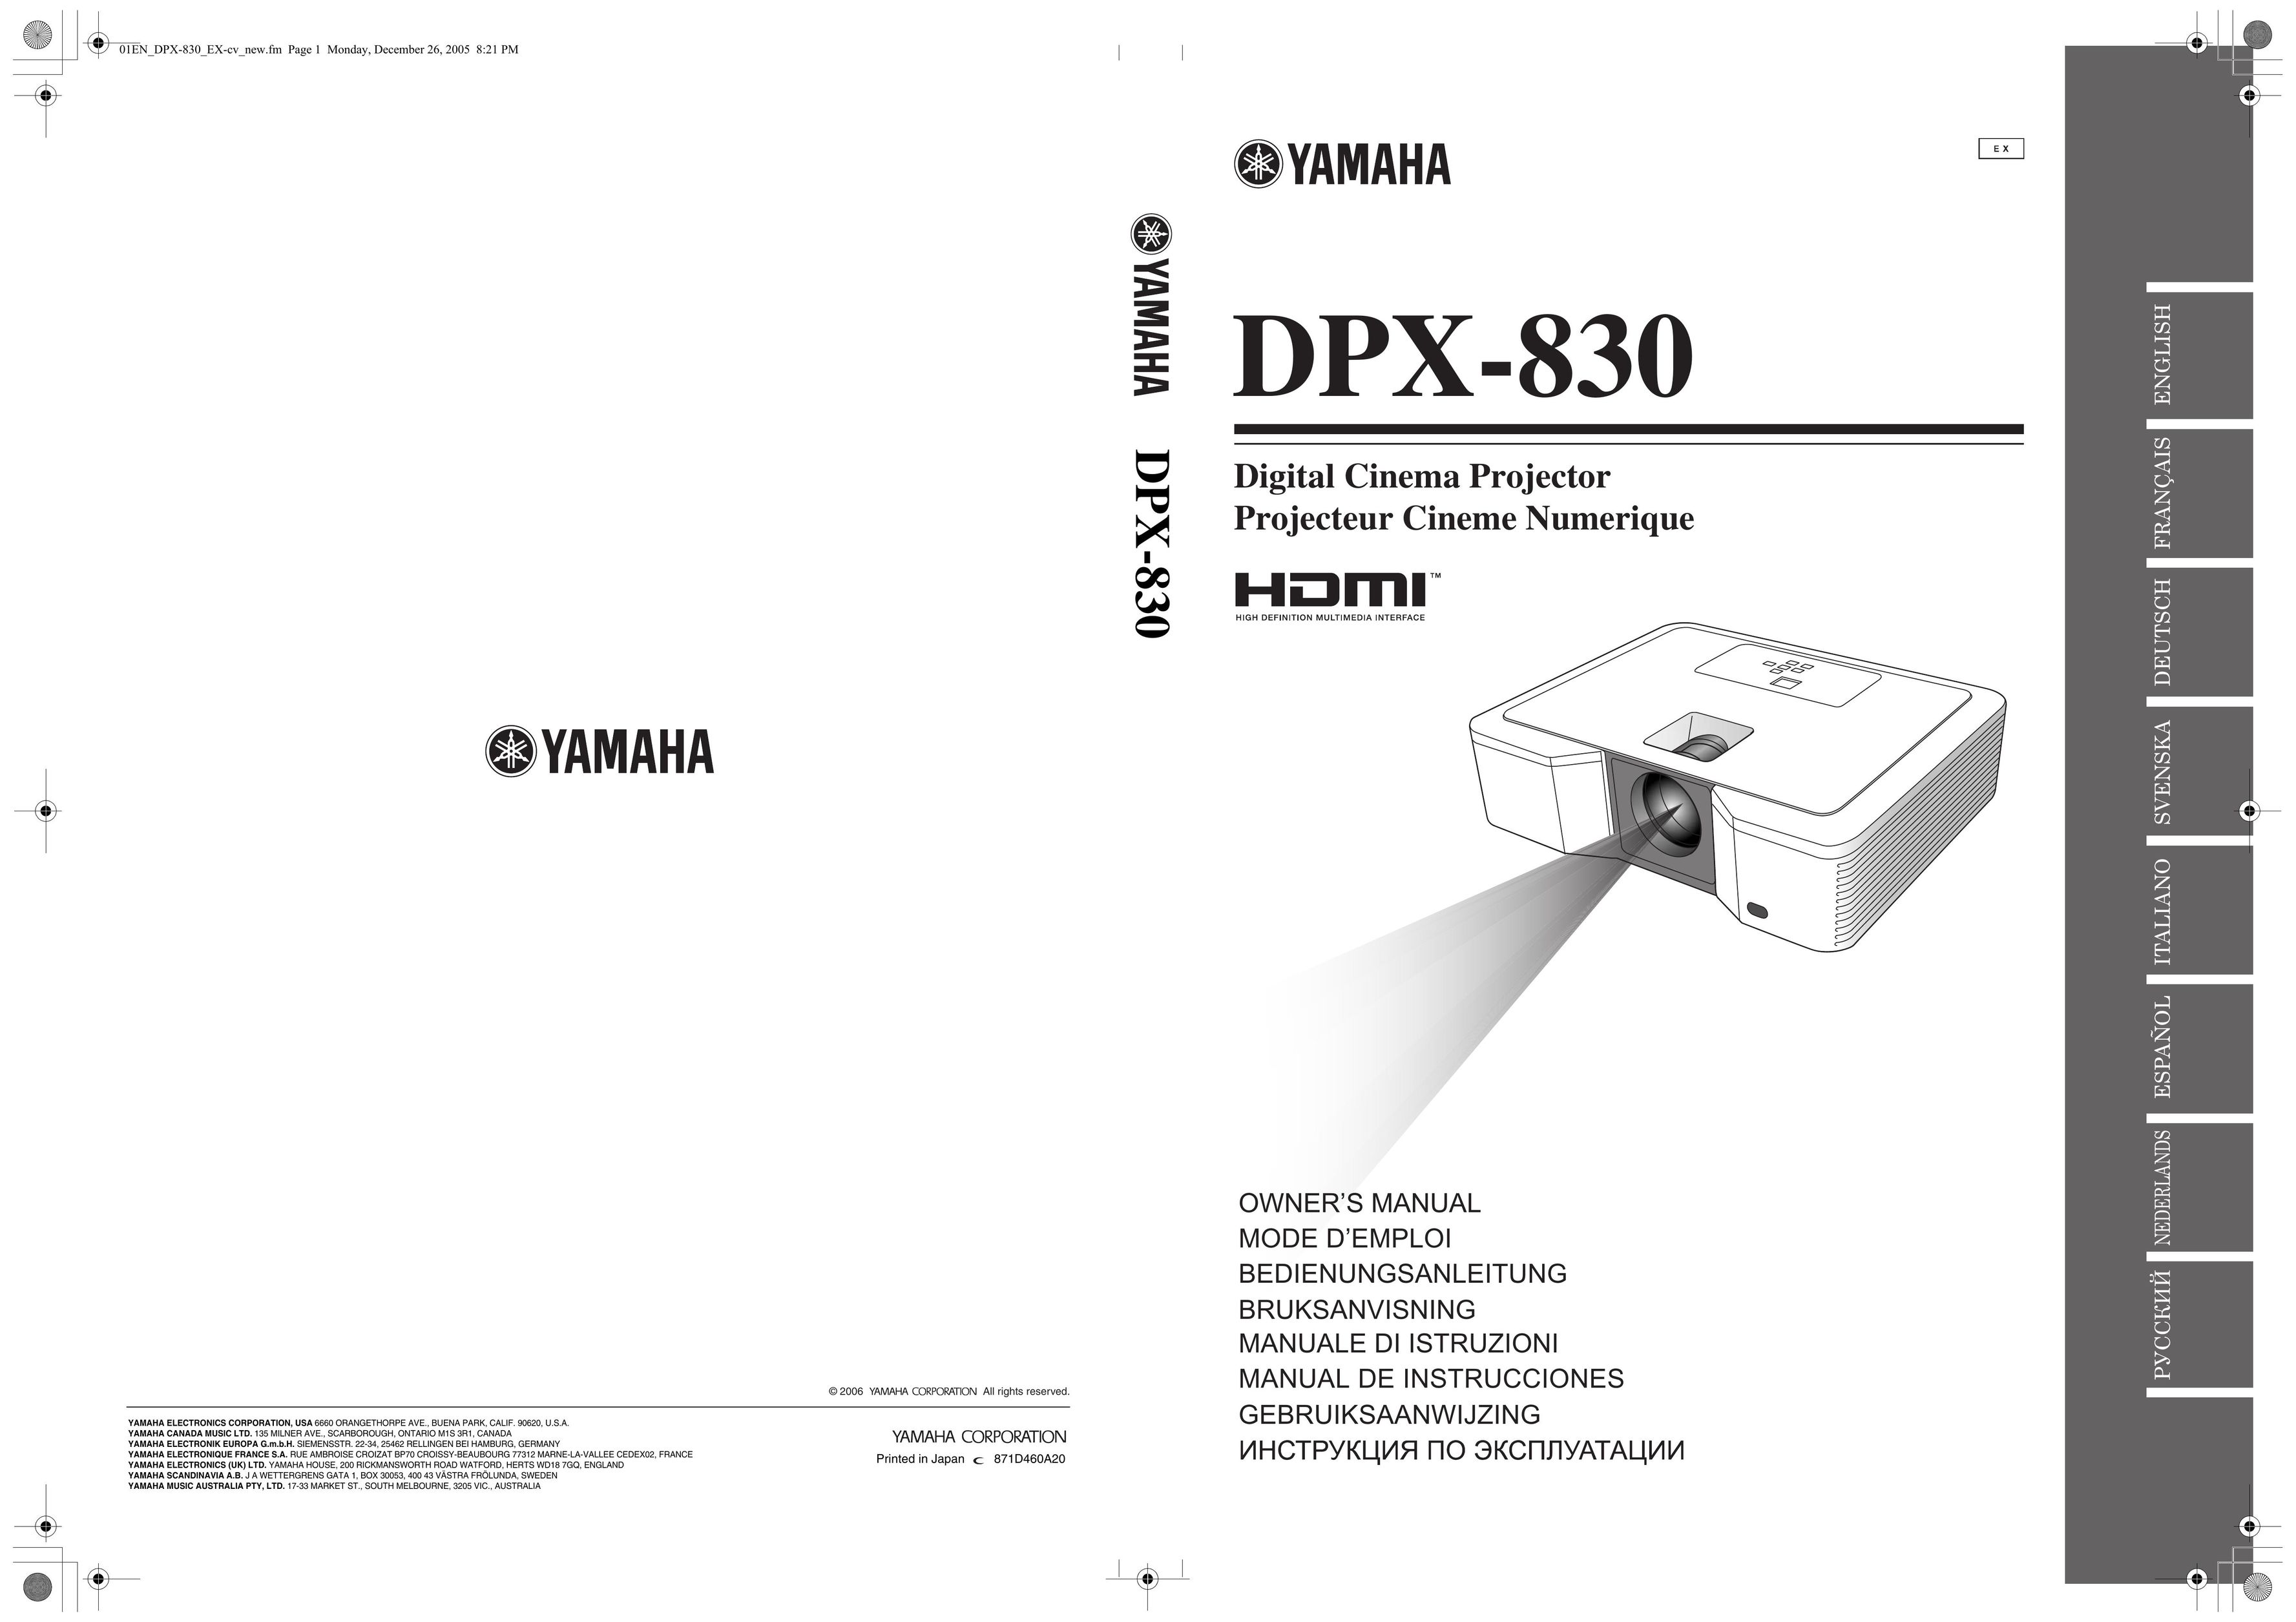 Yamaha DPX-830 Projector User Manual